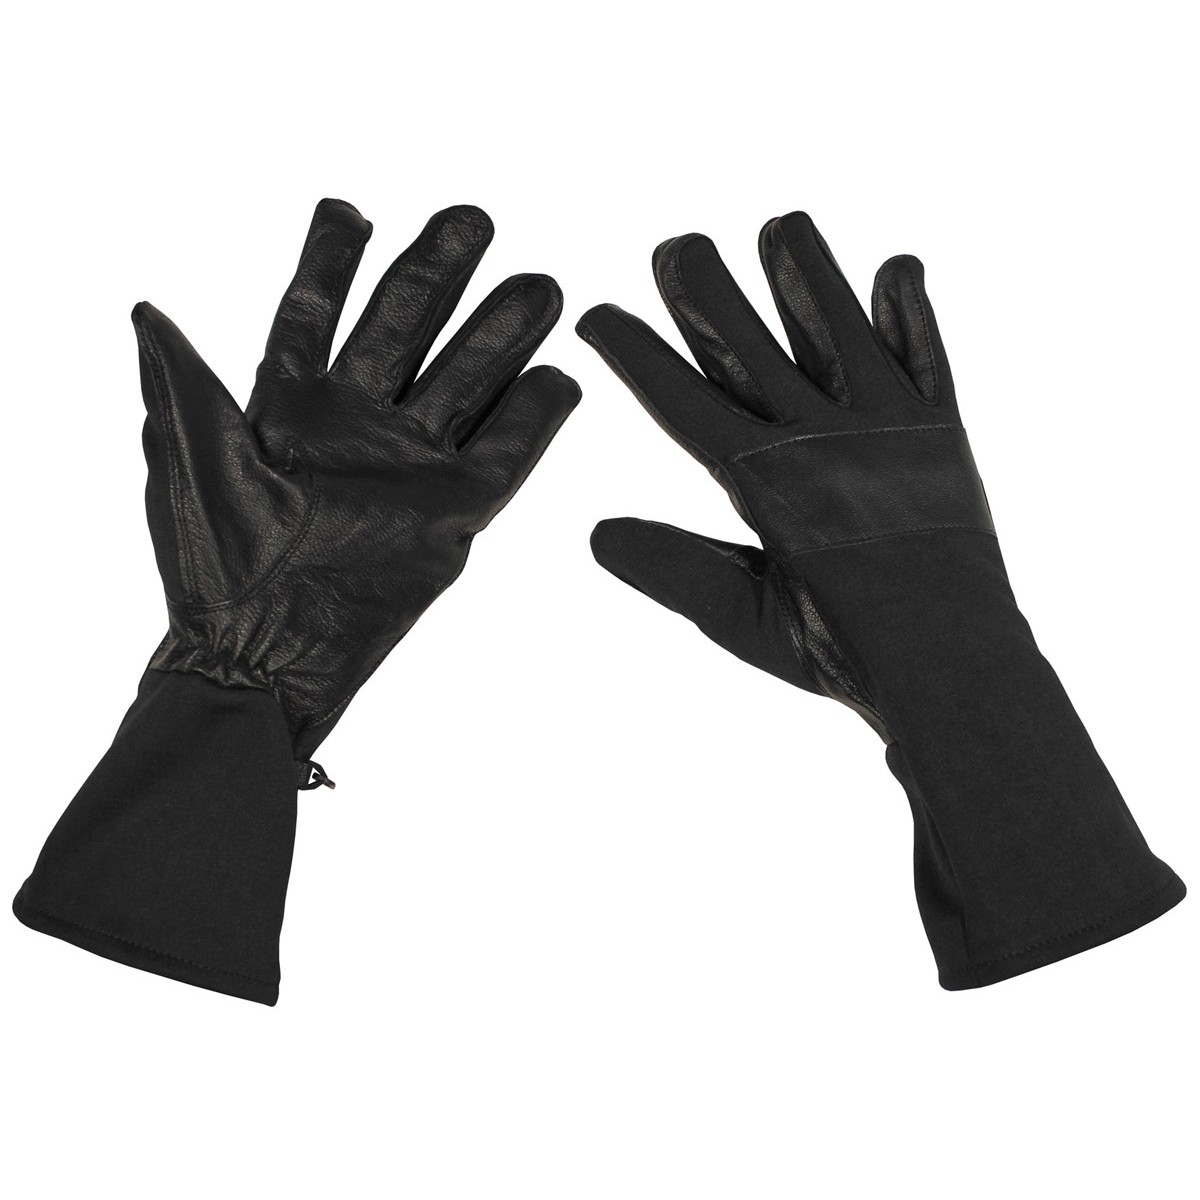 BW German Army Combat Gloves Long Gaiter Leather Trim - Black